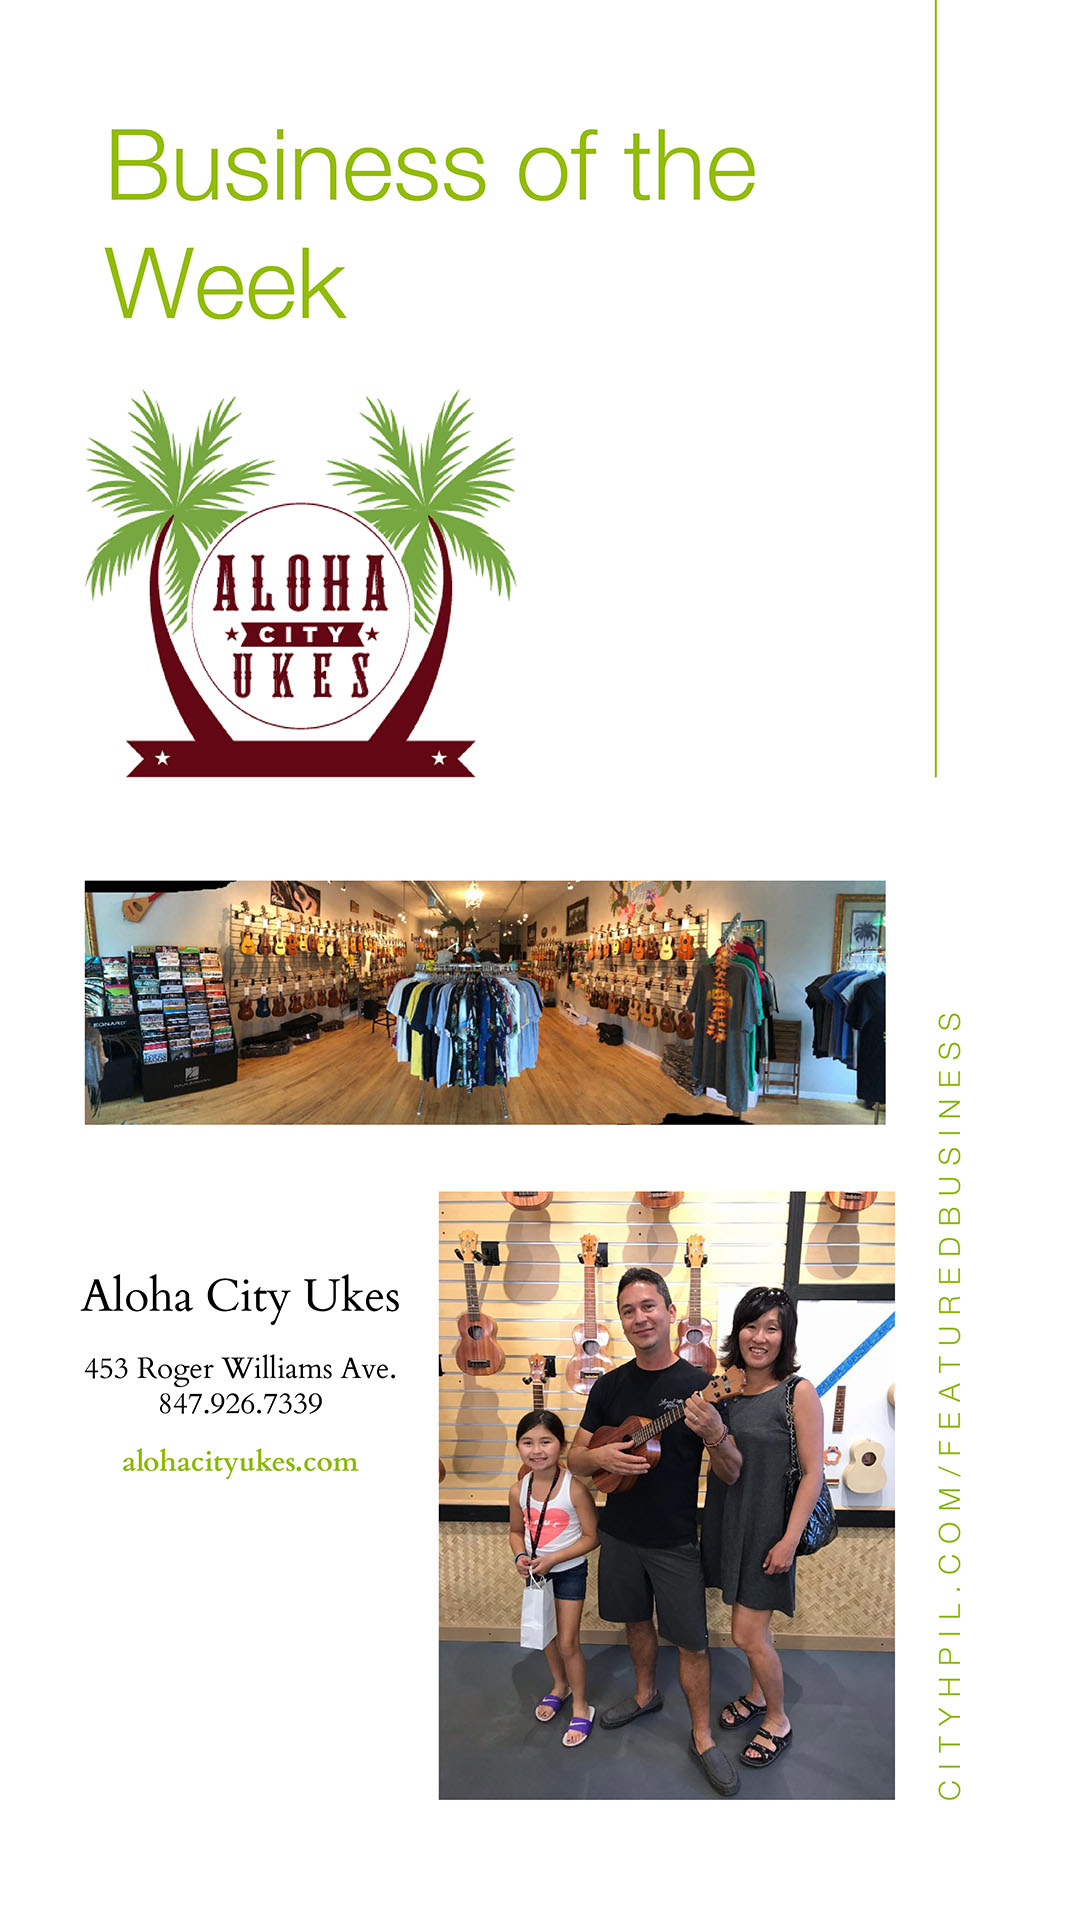 Aloha City Ukes Kiosk